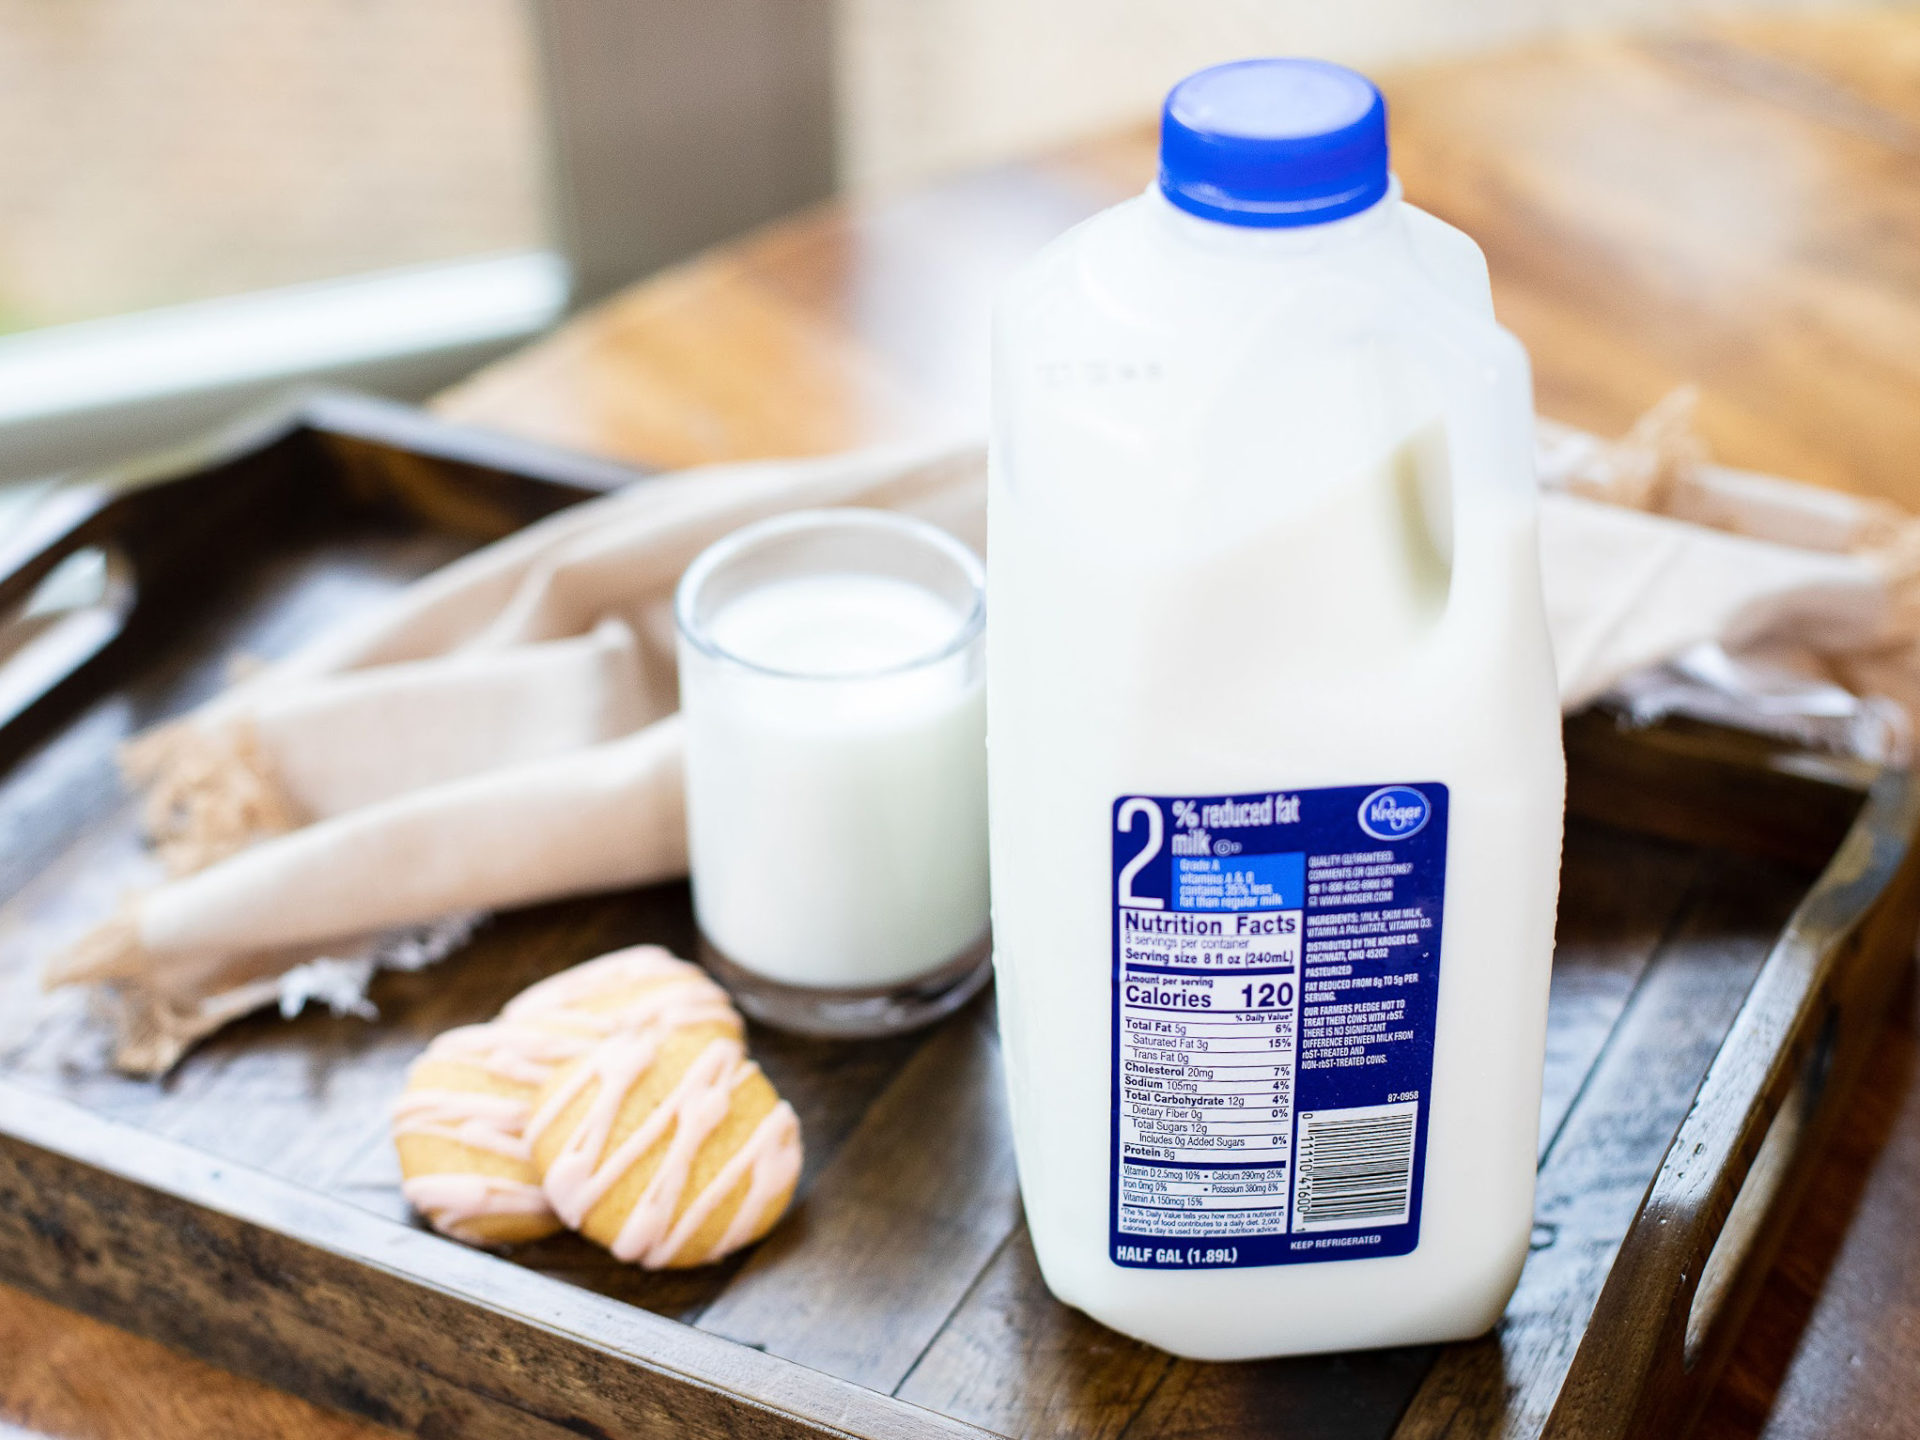 Stock Up On Kroger Brand Milk – Just 97¢ Per Half Gallon